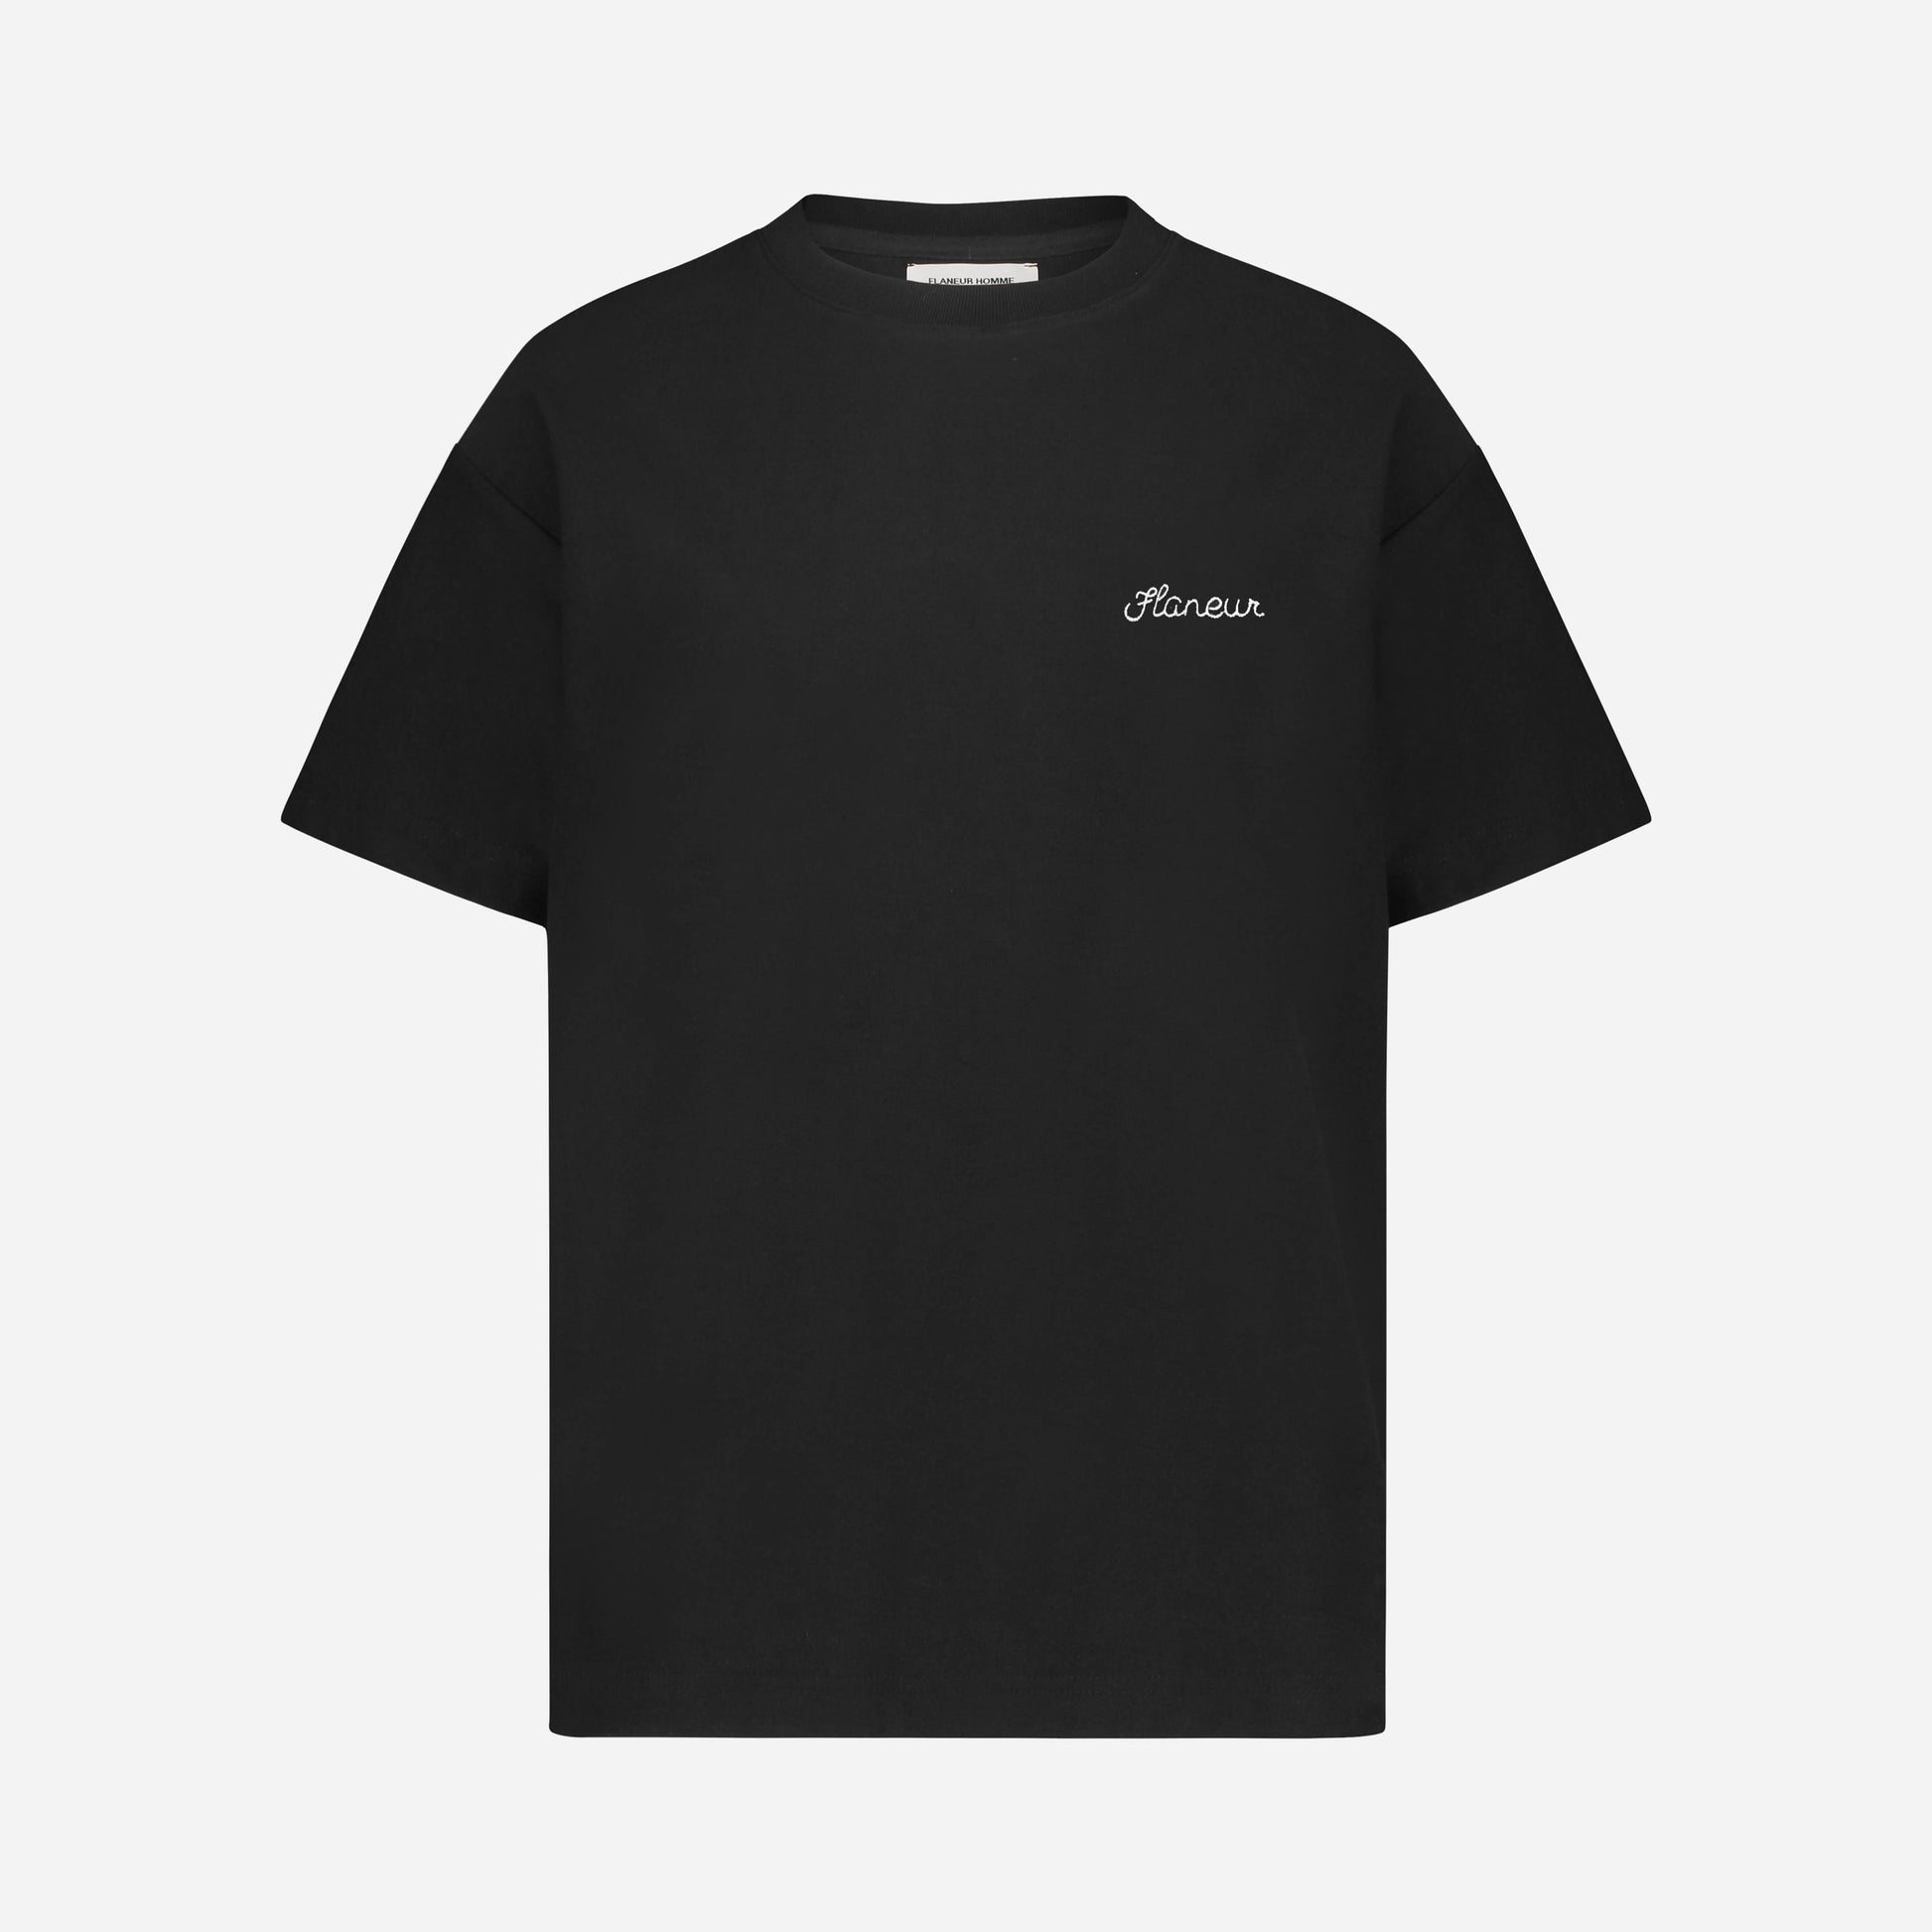 'Flaneur' Signature T-Shirt in Black